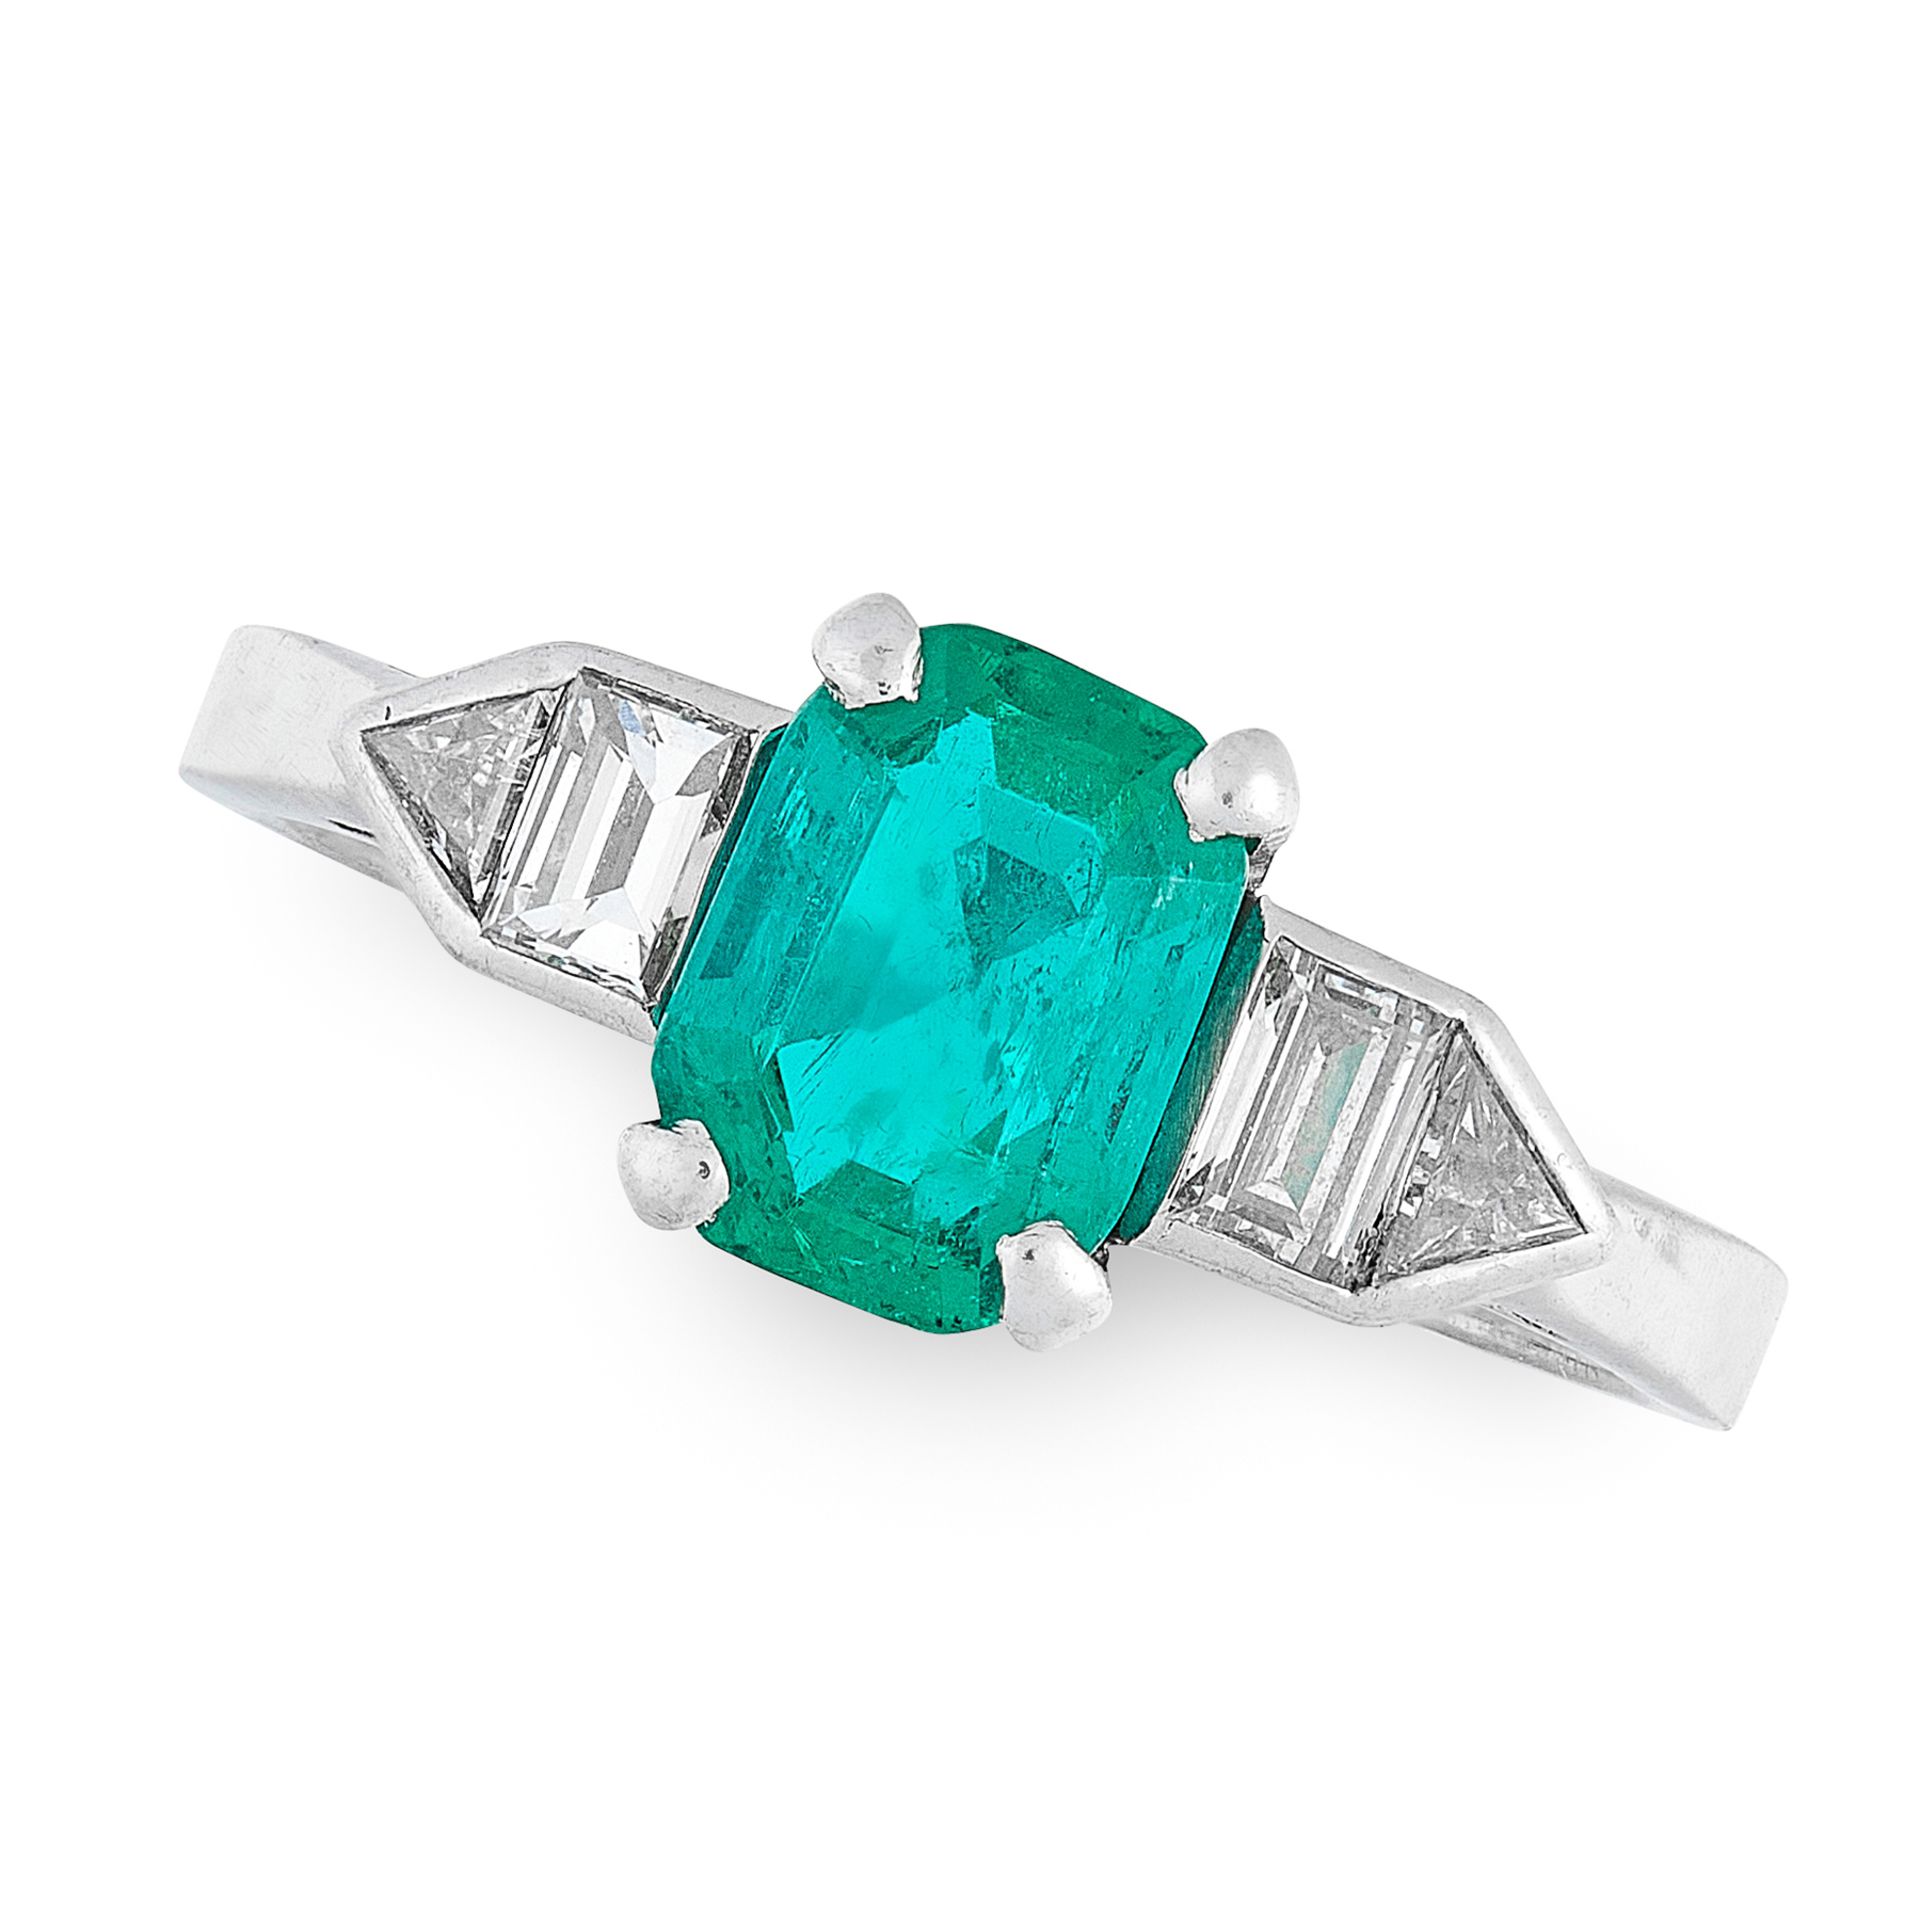 AN EMERALD AND DIAMOND DRESS RING set with an emerald cut emerald of 1.41 carats between geometric